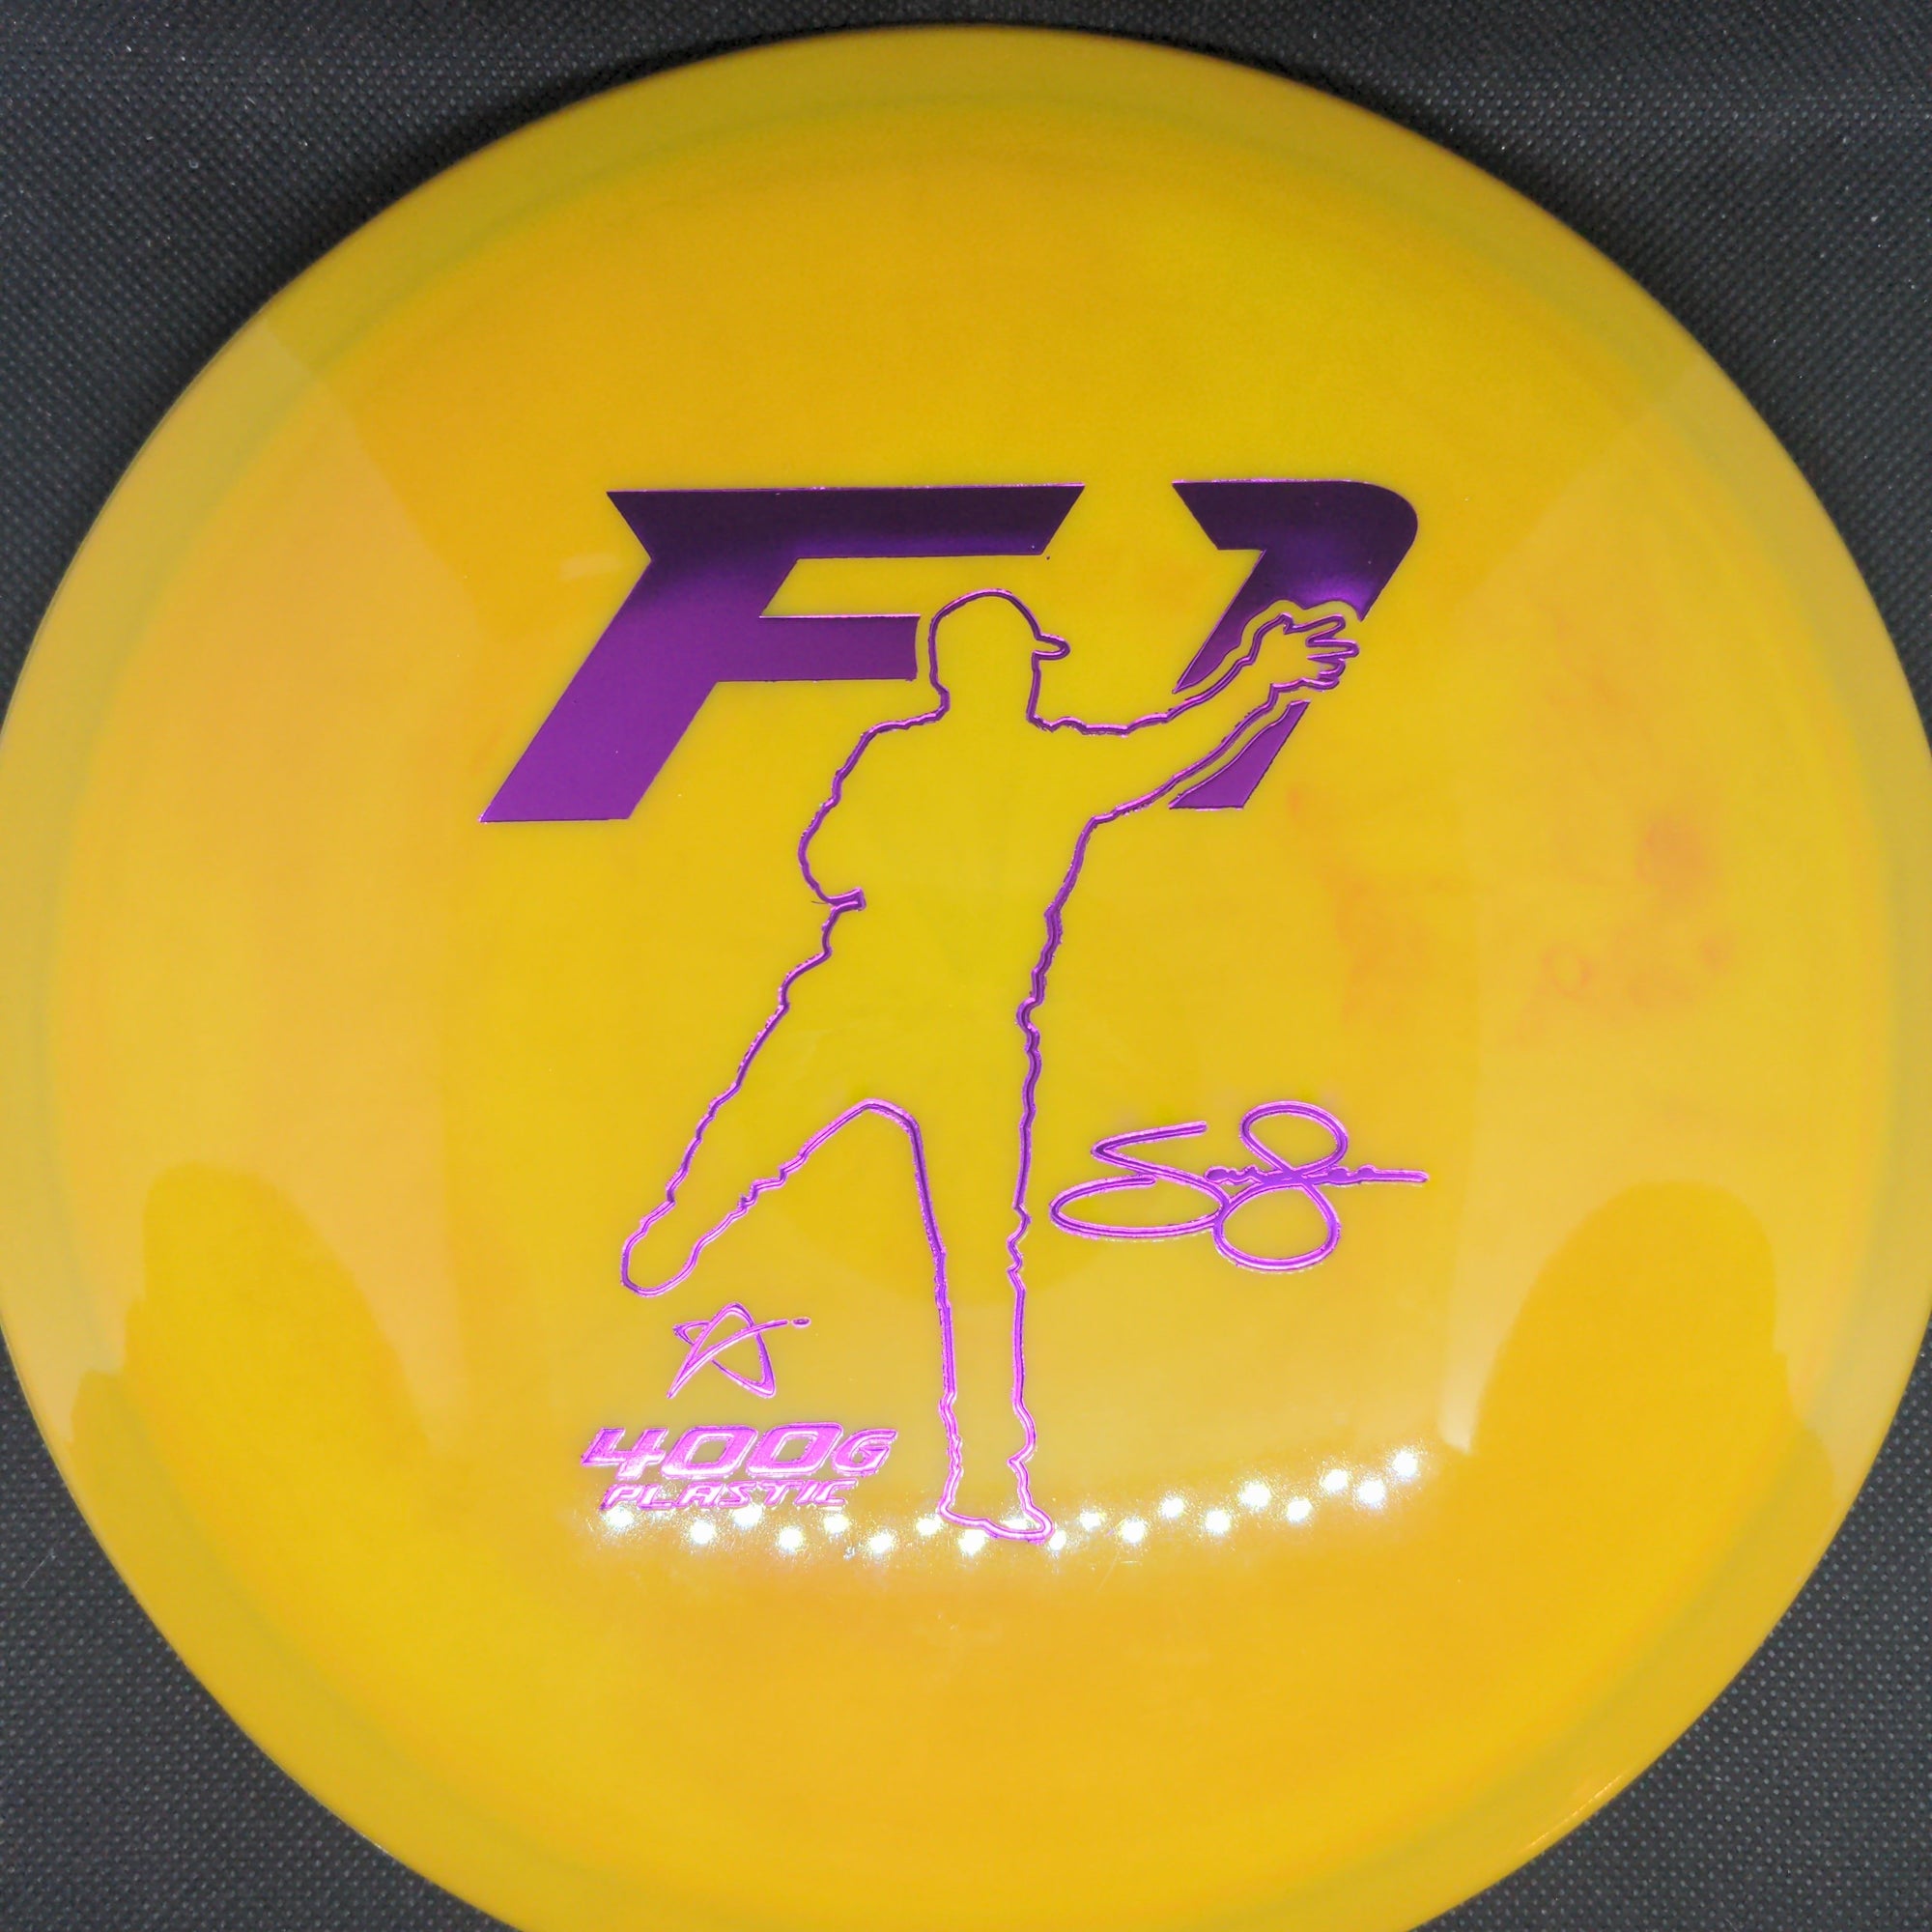 Prodigy Fairway Driver Yellow/Orange Purple Stamp 173g F1 400G Plastic, Sam Lee 2021, Signature Series